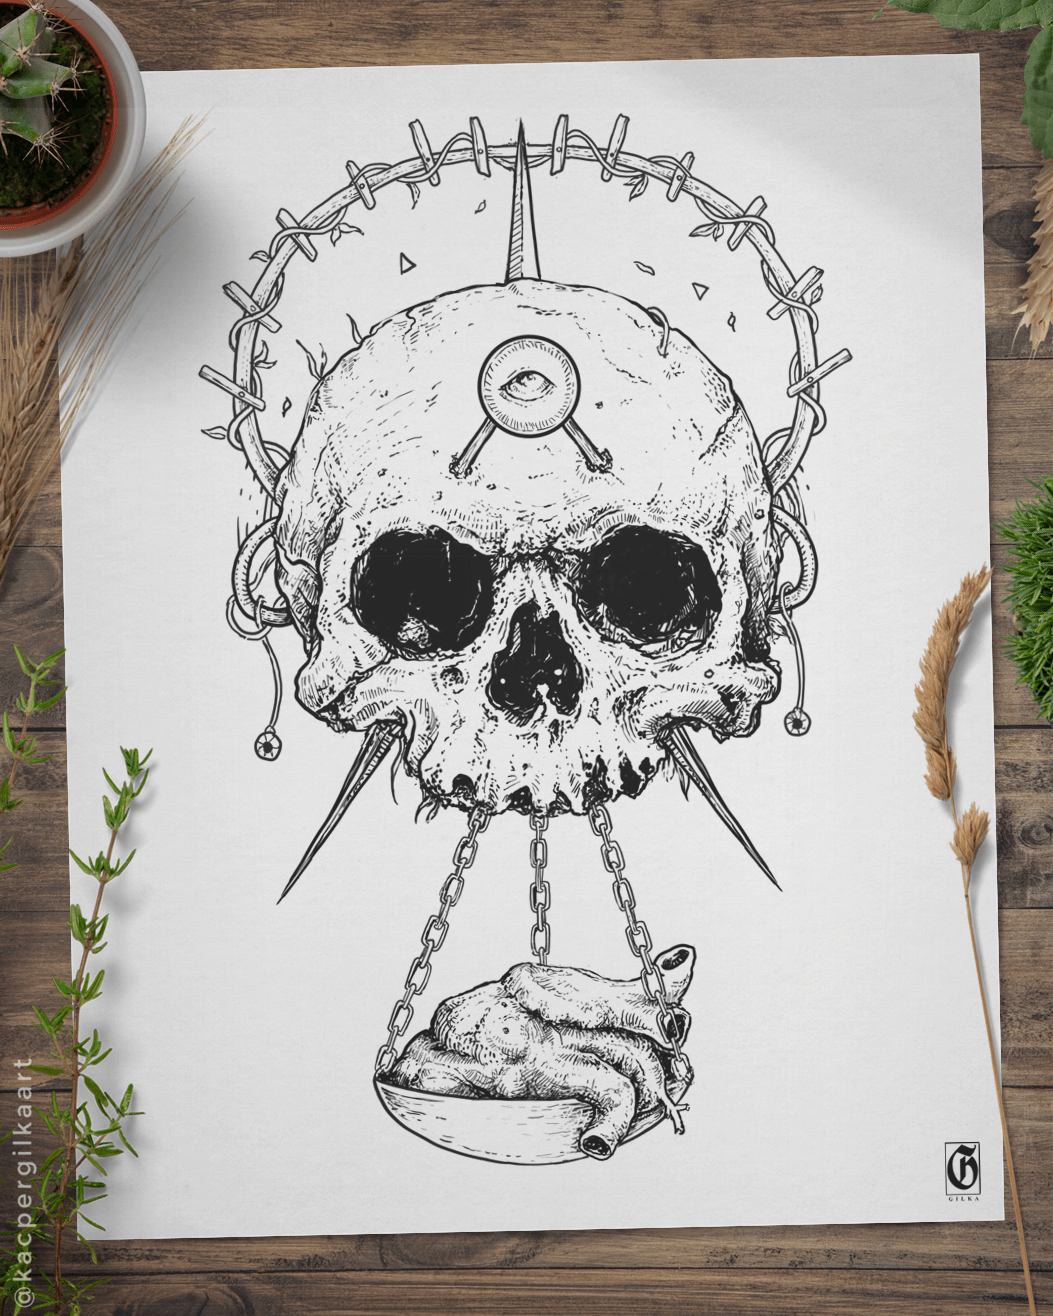 Tshirt Design skull surreal occult dark art symbolic metal band heavy art ornaments creepy